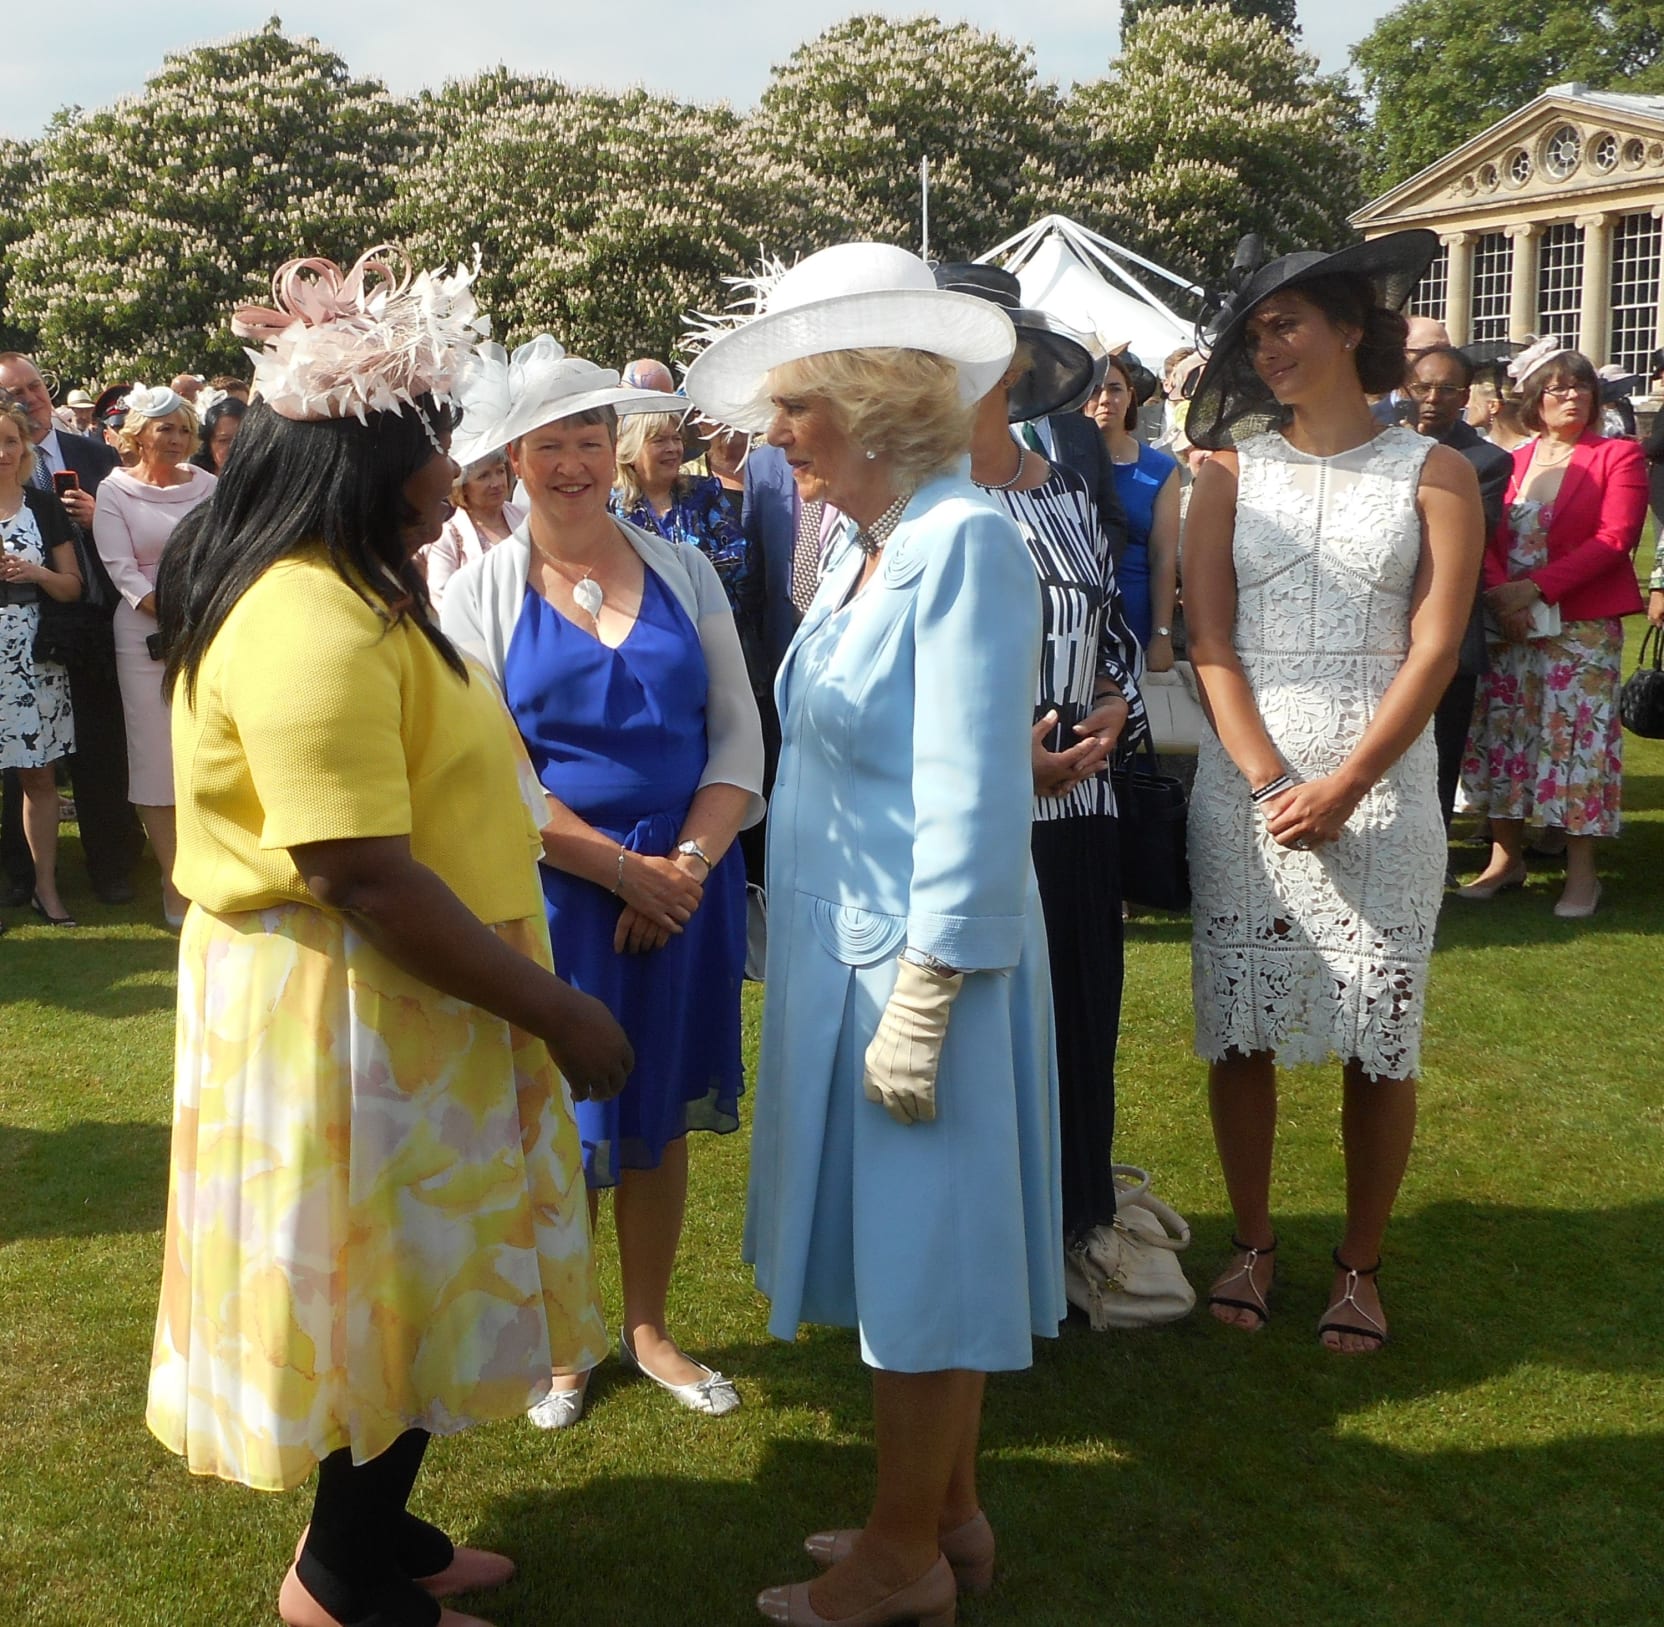 Meeting the Duchess of Cornwall